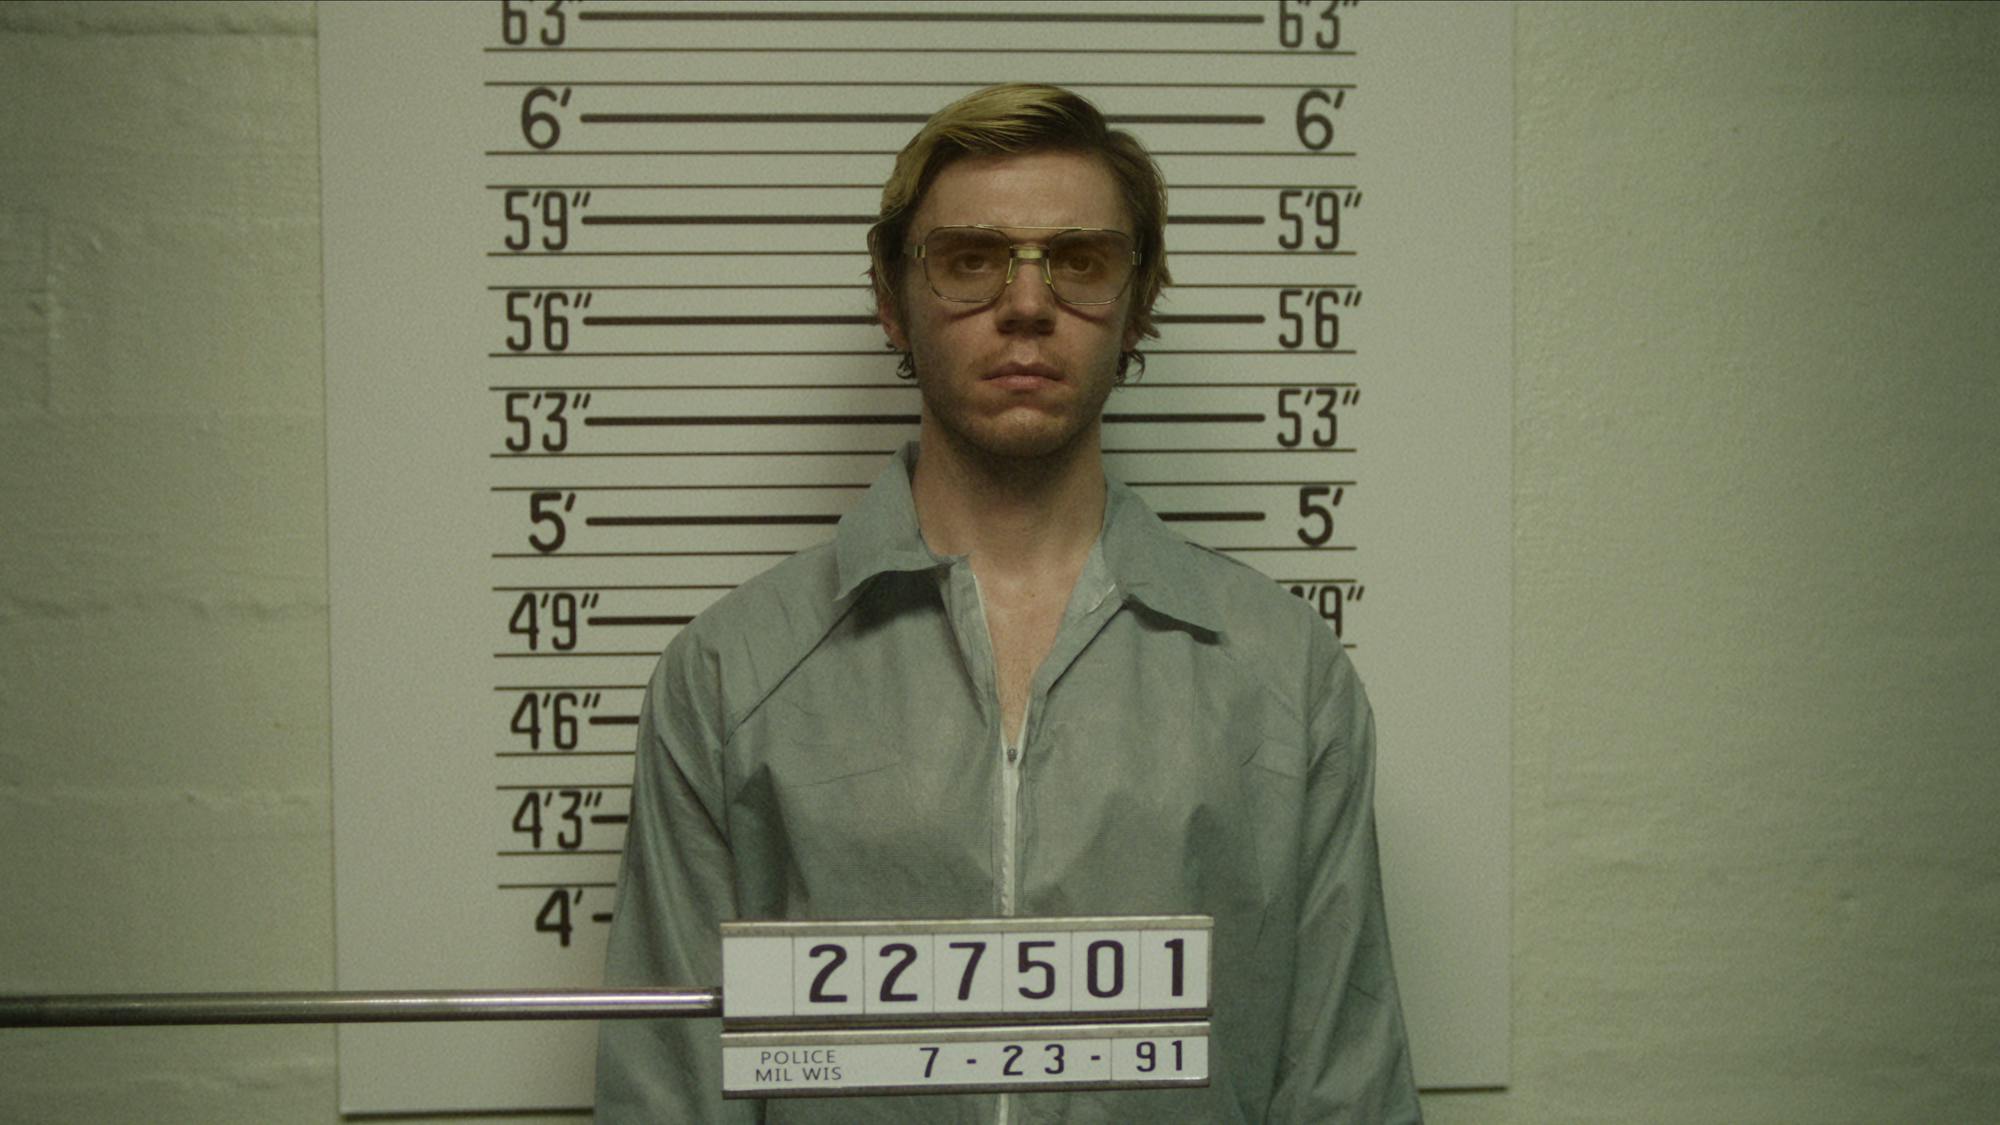 Jeffrey Dahmer (Evan Peters) wears grey prison garb and gets his mugshot taken.